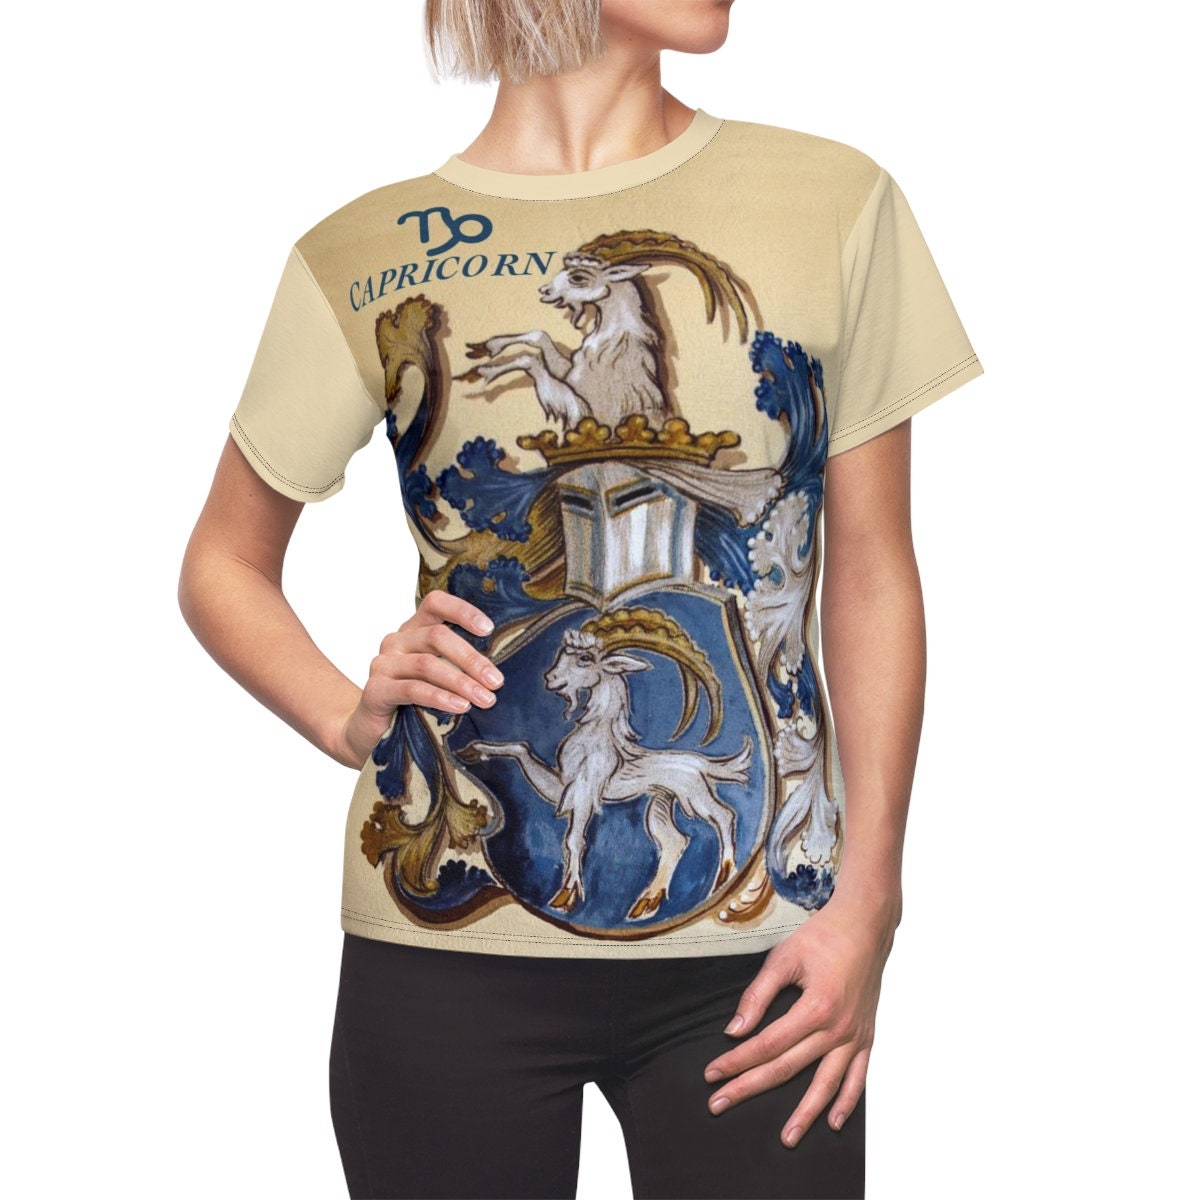 Capricorn / Astrology / Women / Zodiac / T-shirt / Tee / Shirt / Vintage / Art / Capricorn / Birthday / Clothing / Gift for Her - Chloe Lambertin